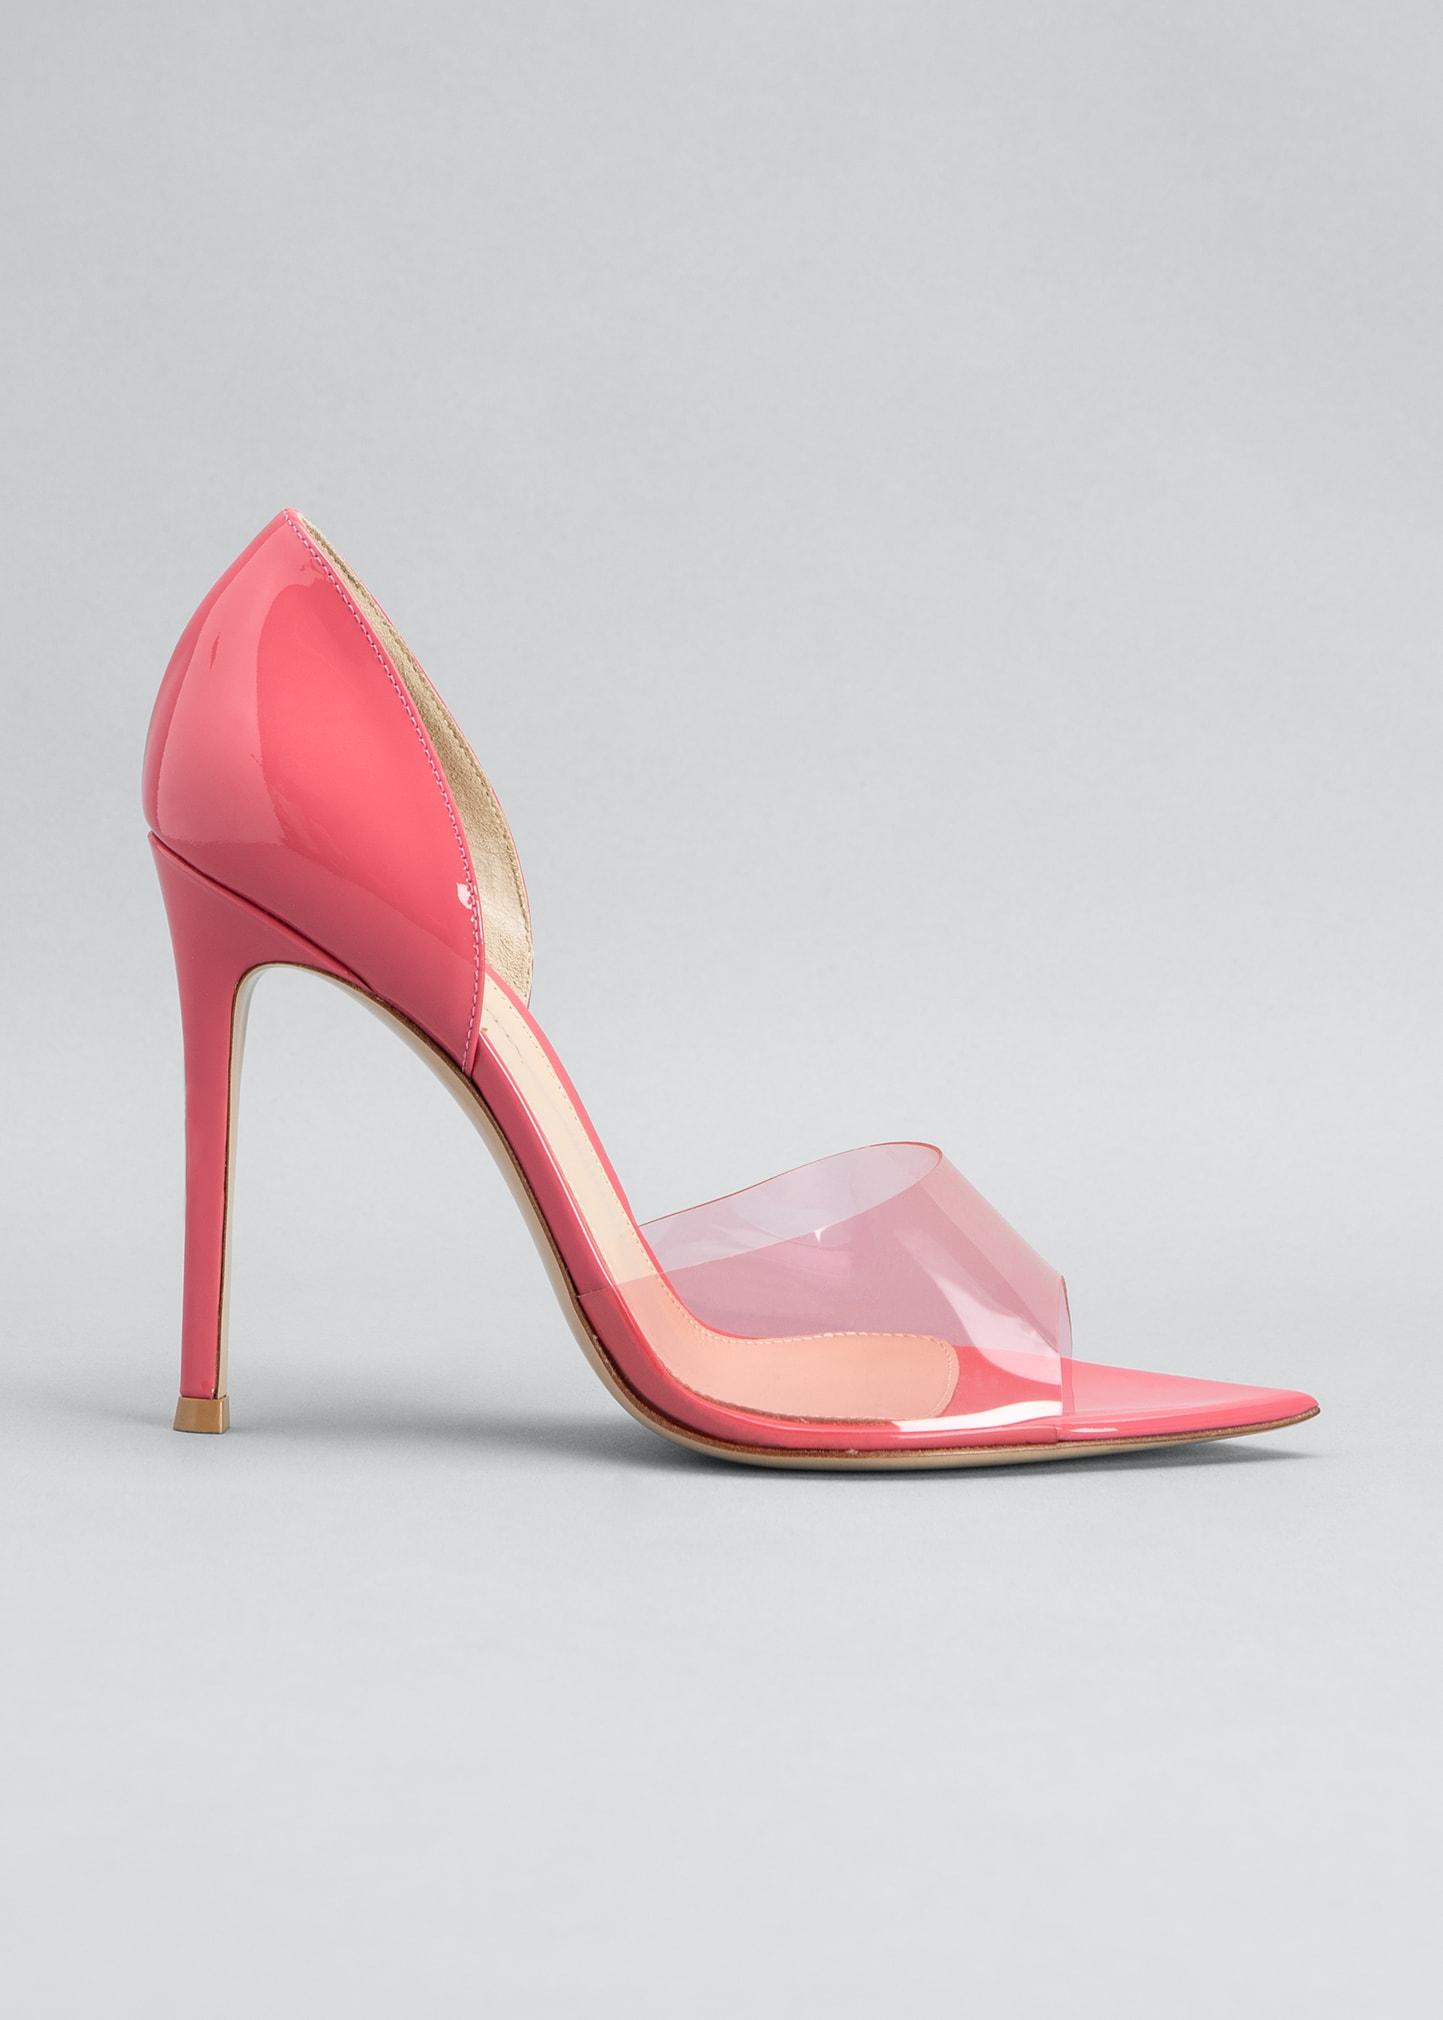 Red Pink Velvet Peep Toe Platform Heels Elegant Blush Pink Heels Wedding  For Women Size 34 40 From Saxg875, $55.08 | DHgate.Com